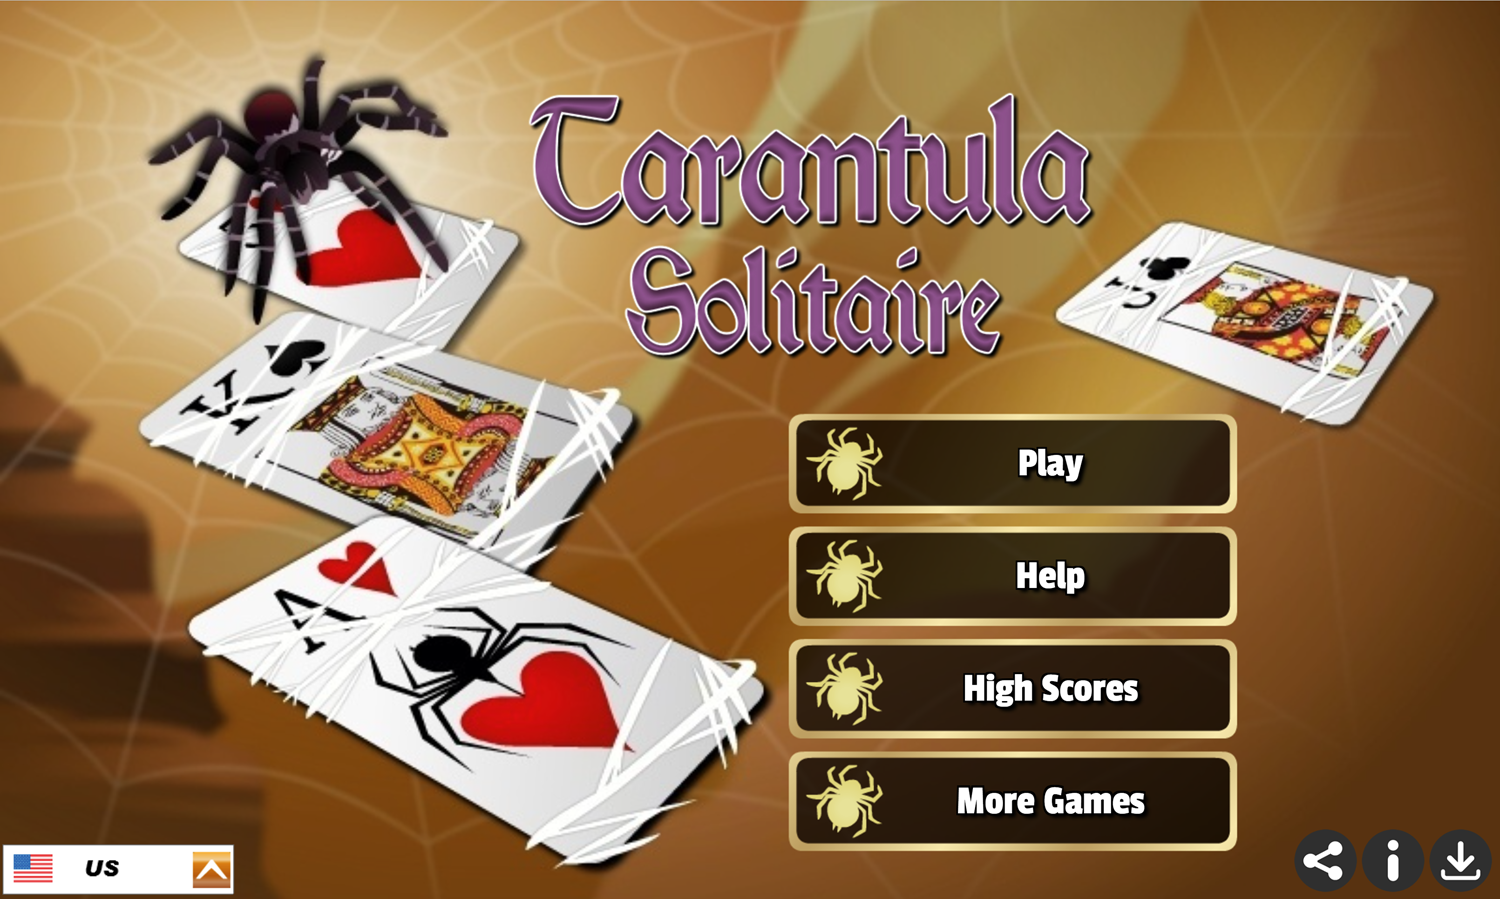 Tarantula Solitaire Game Welcome Screen Screenshot.